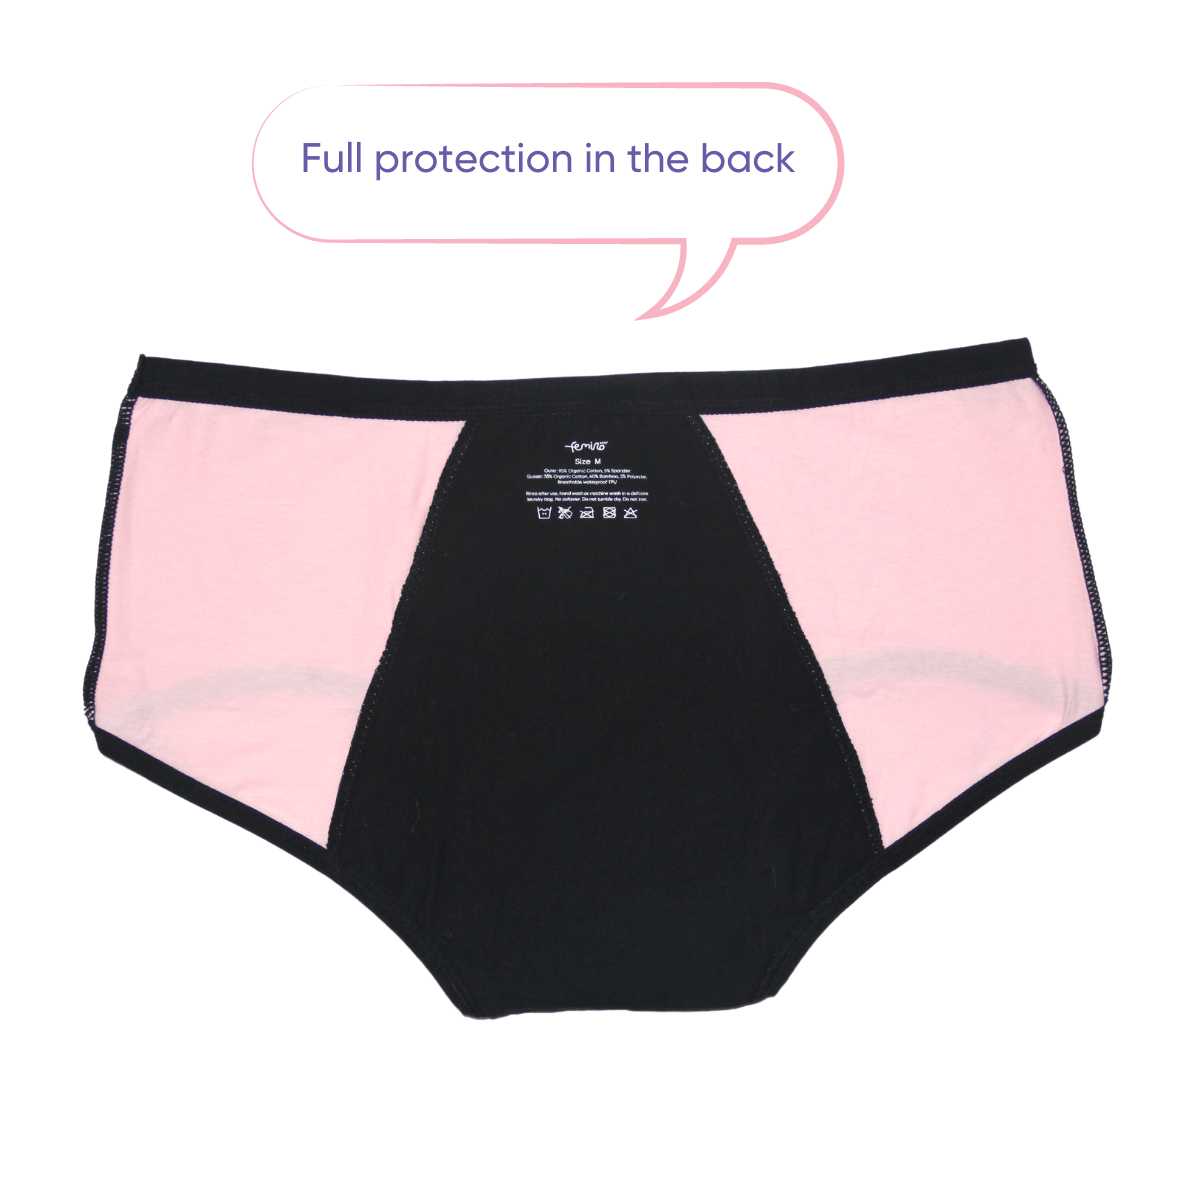 Period Underwear - Femino